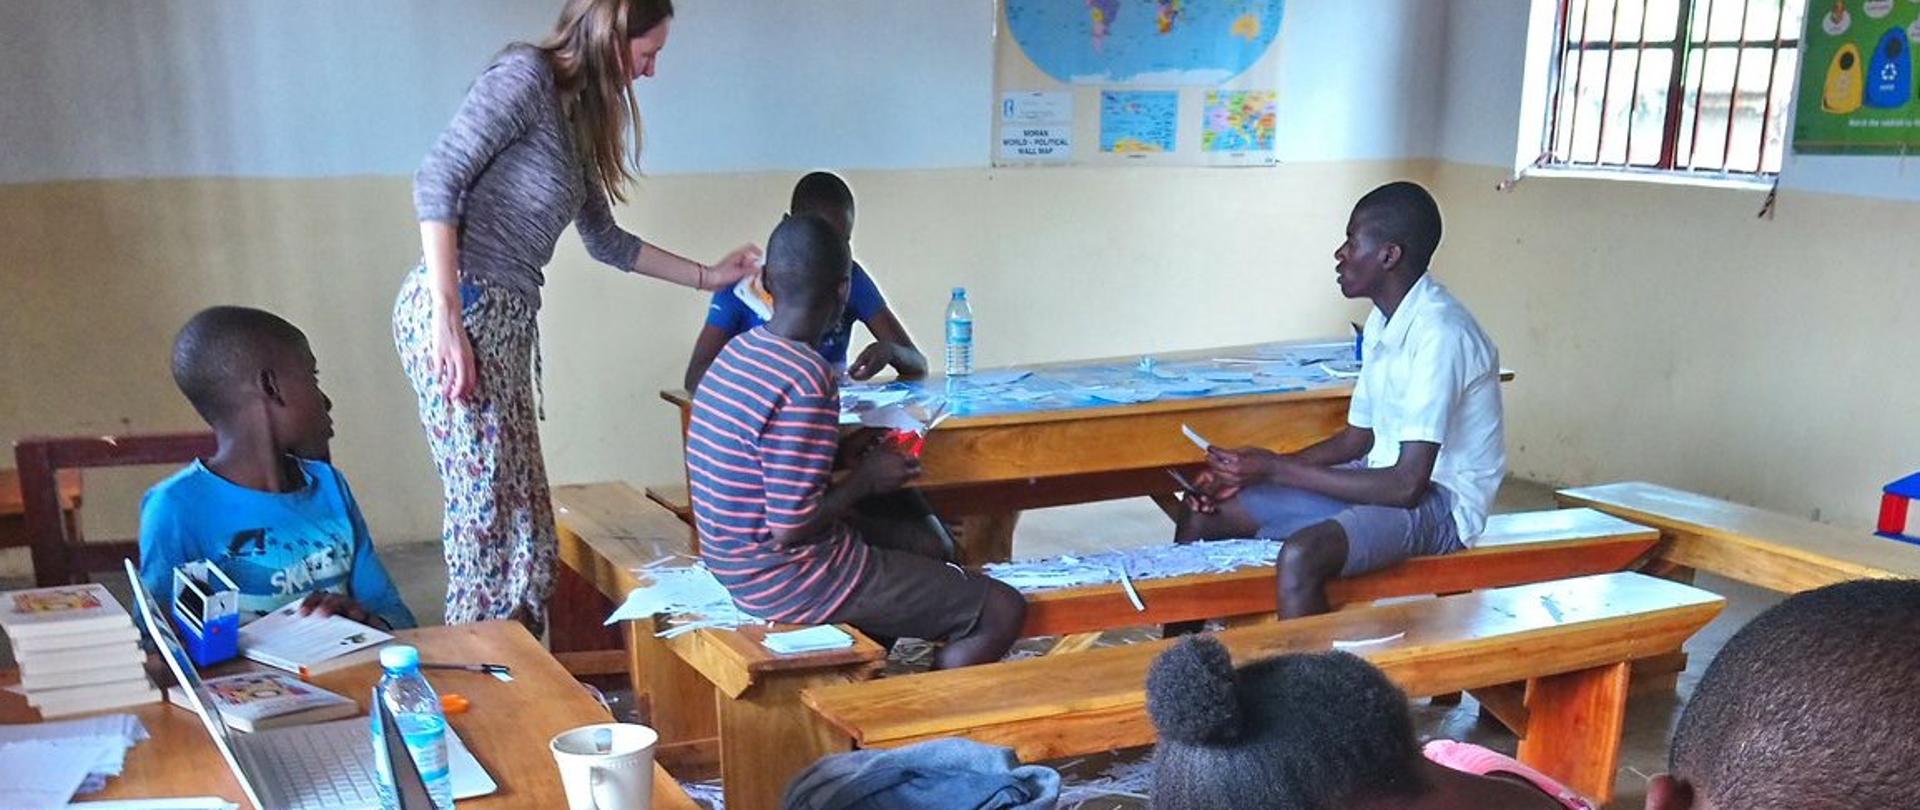 Words shape the world - Project LibraAfrica Center for kids in Uganda